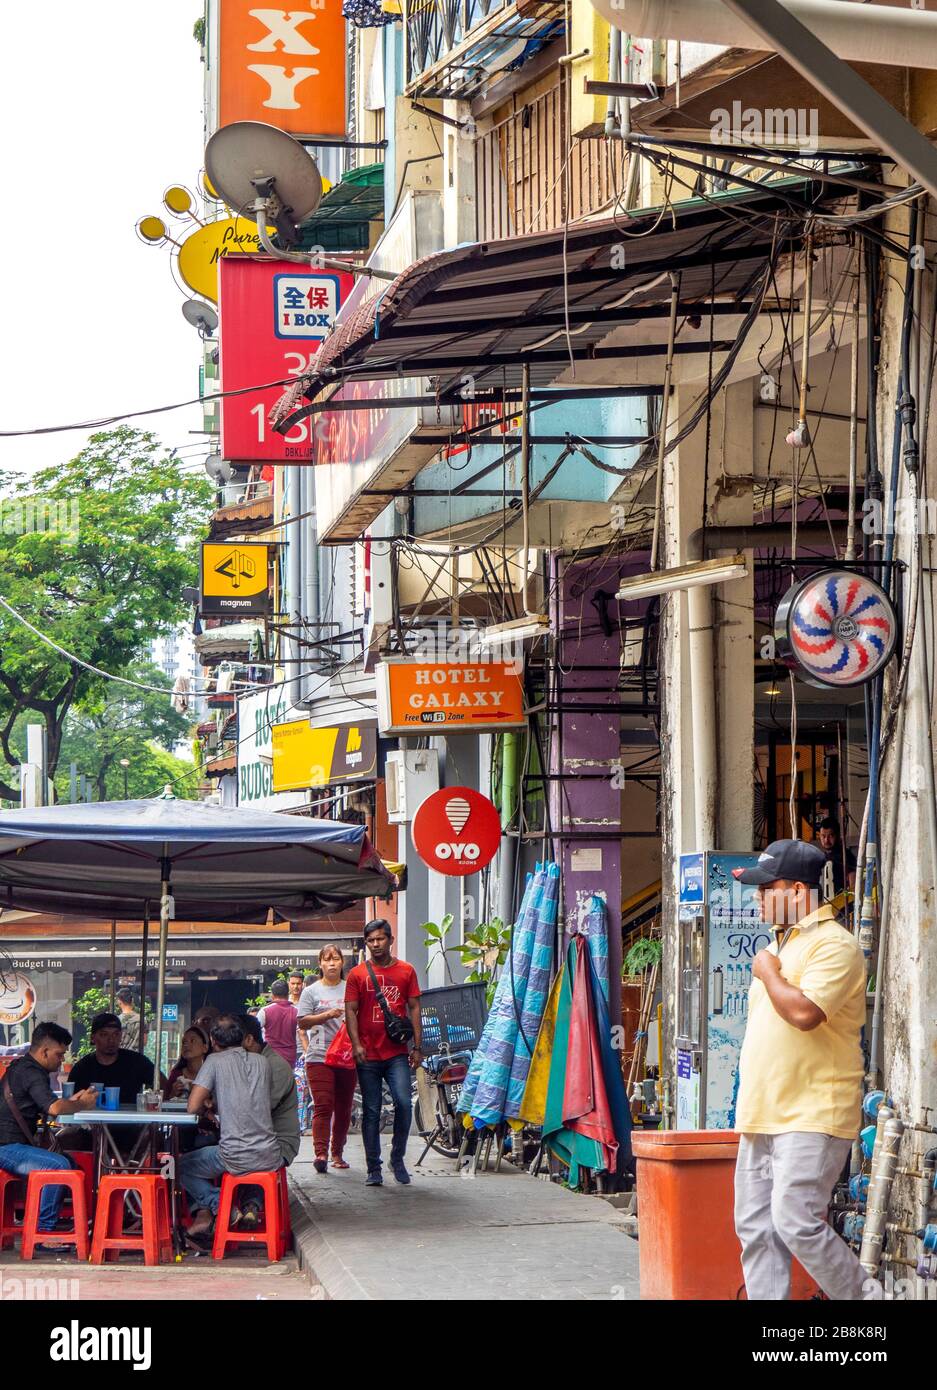 People eating al fresco style and tourists walking along Jalan Alor Street Bukit Bintang, Kuala Lumpur Malaysia. Stock Photo